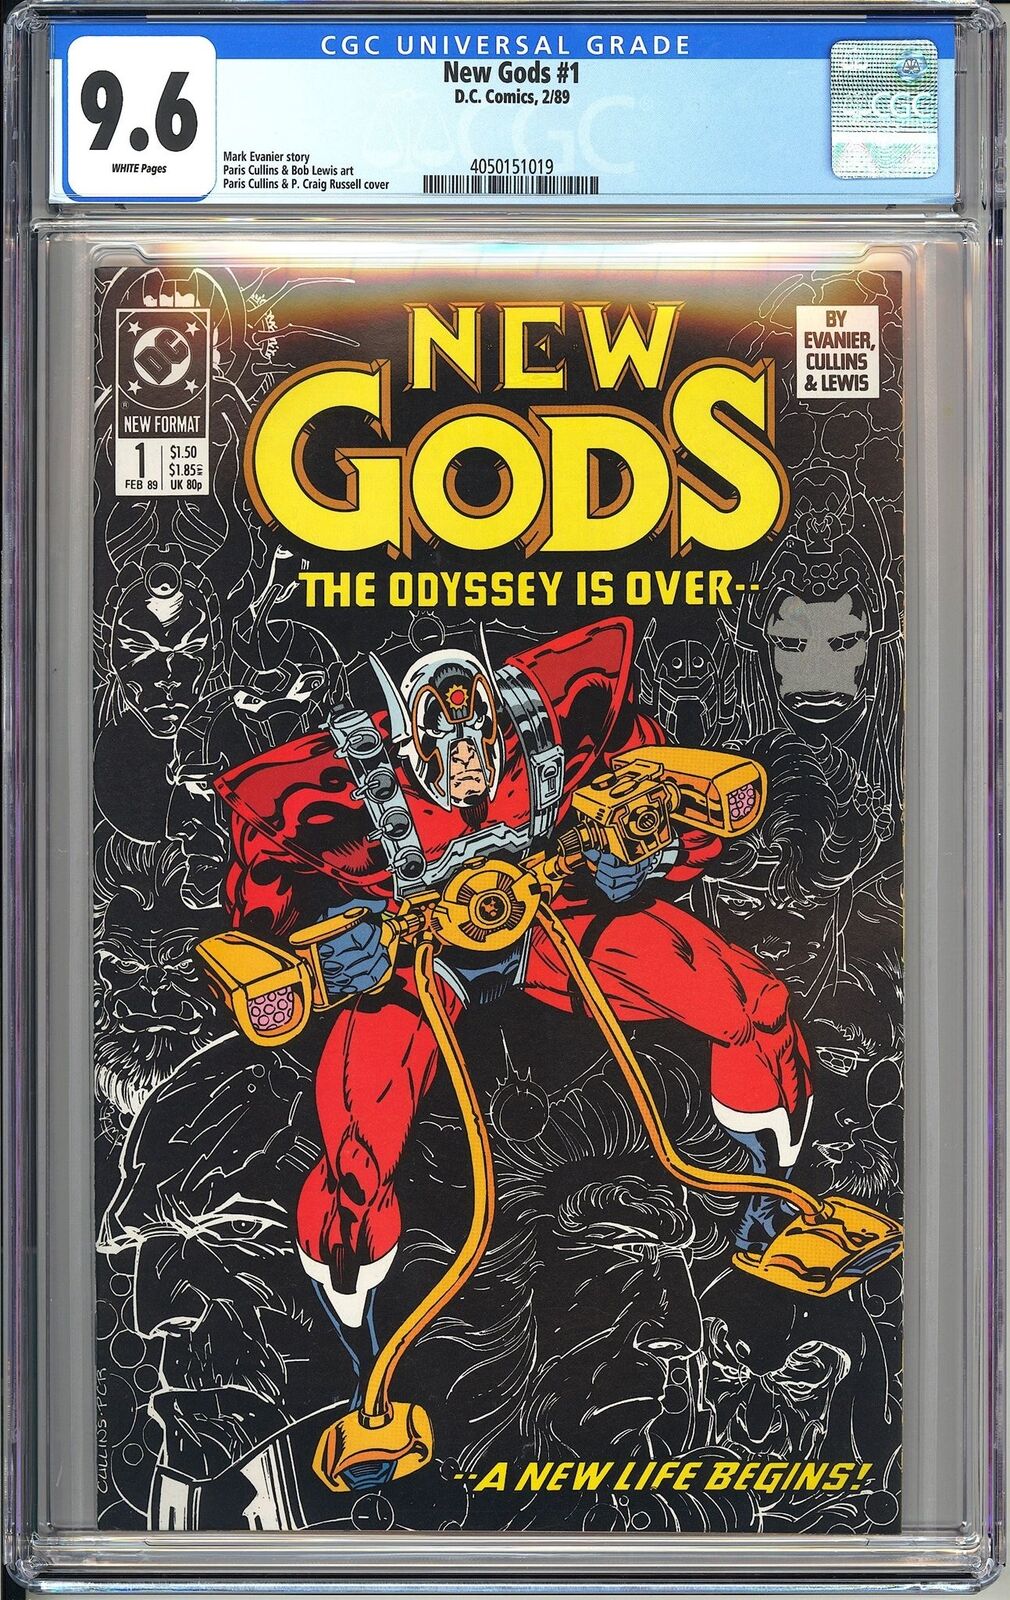 New Gods #1 CGC 9.6 1989 4050151019 1st ISSUE KEY Scarce COPPER AGE